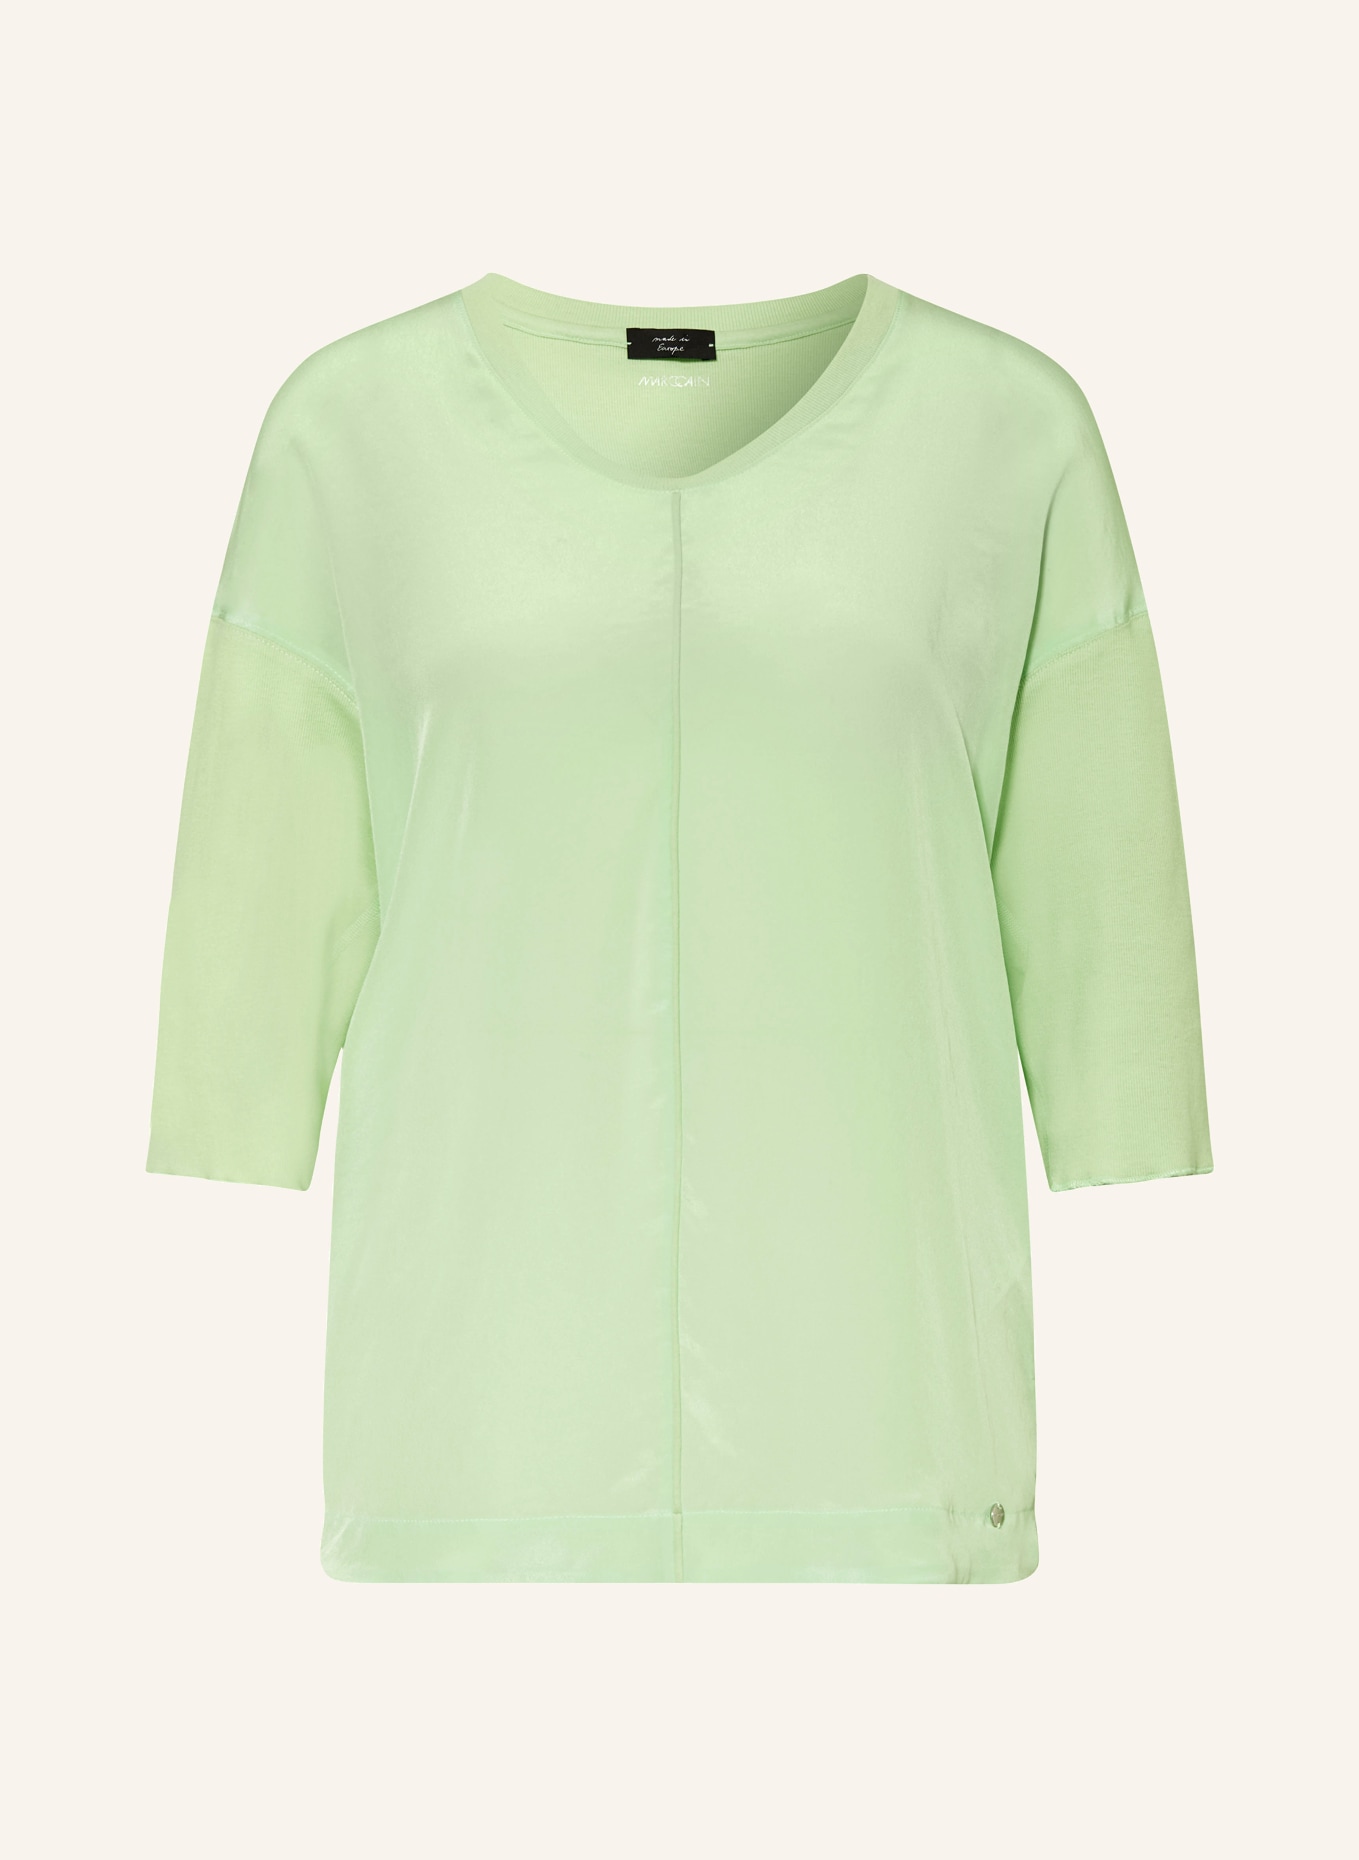 MARC CAIN Blusenshirt im Materialmix, Farbe: 531 light apple green (Bild 1)